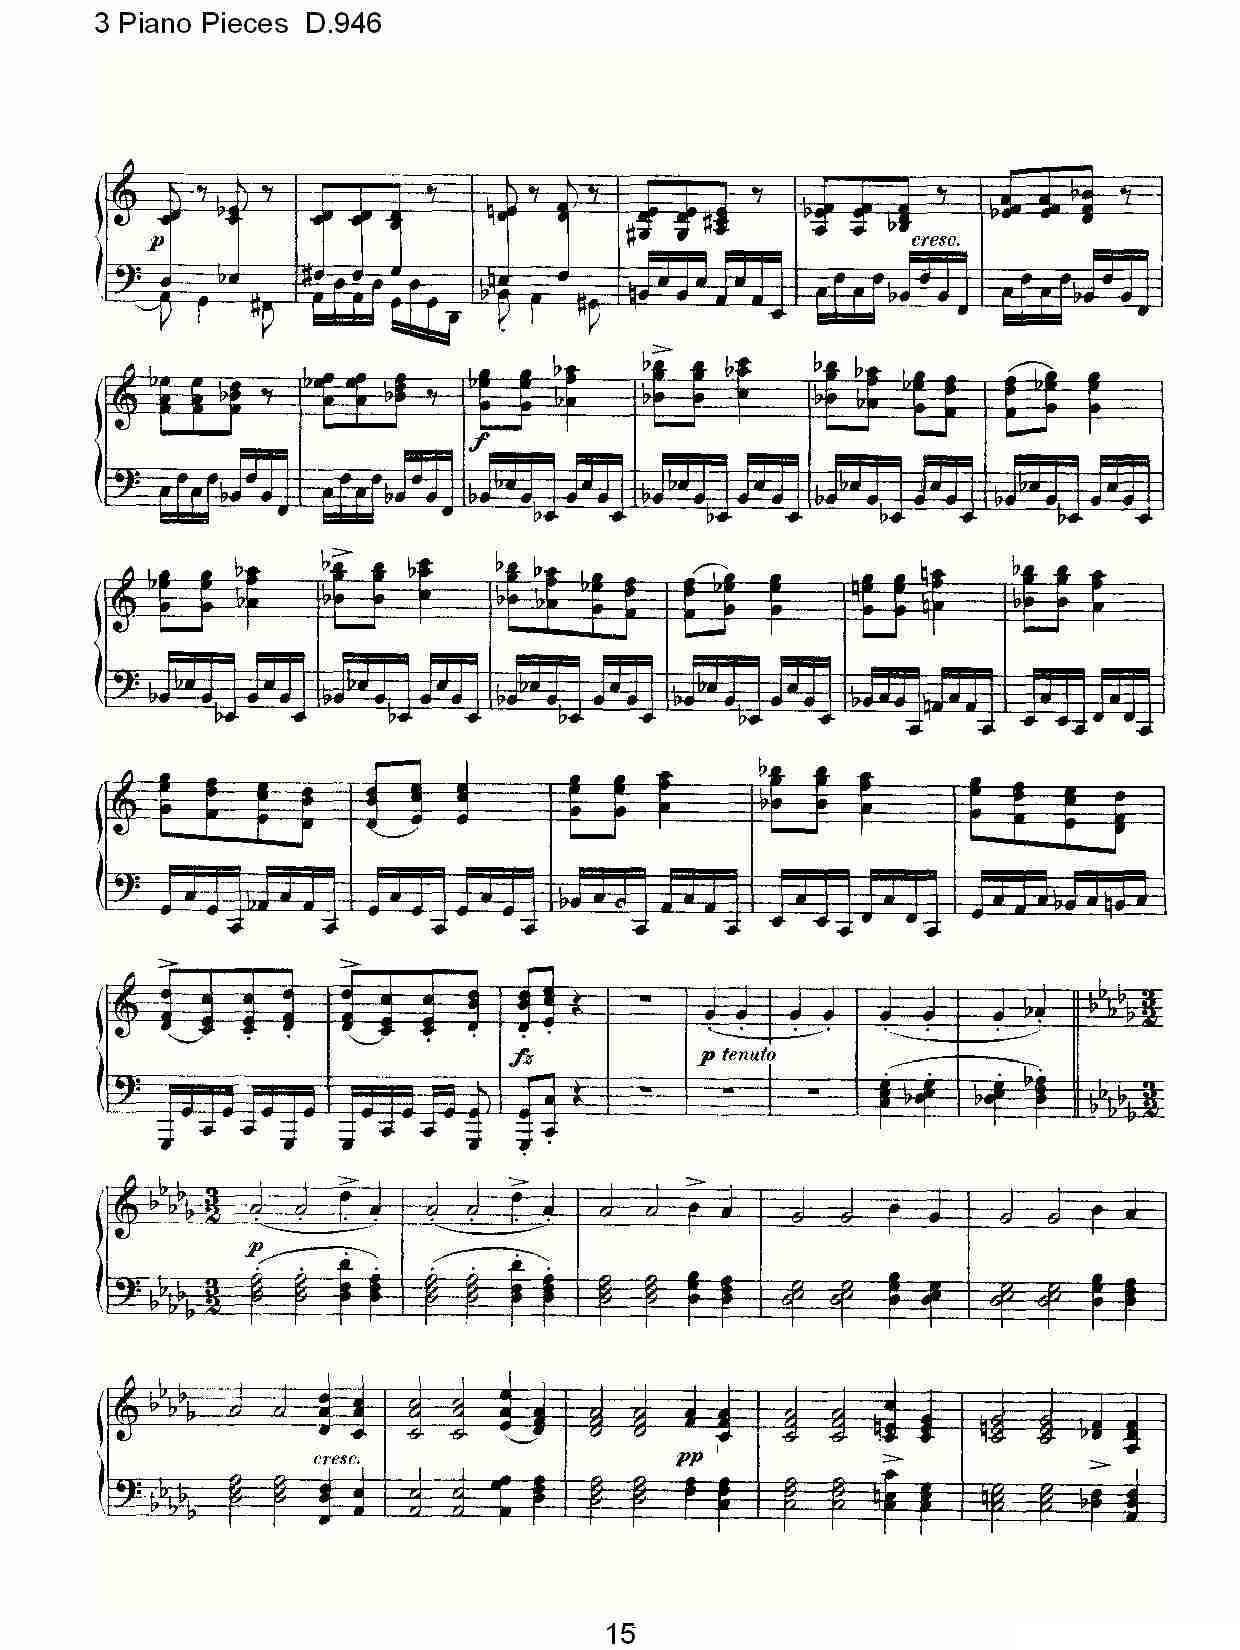 3 Piano Pieces D.946（钢琴三联奏D.946）钢琴曲谱（图15）